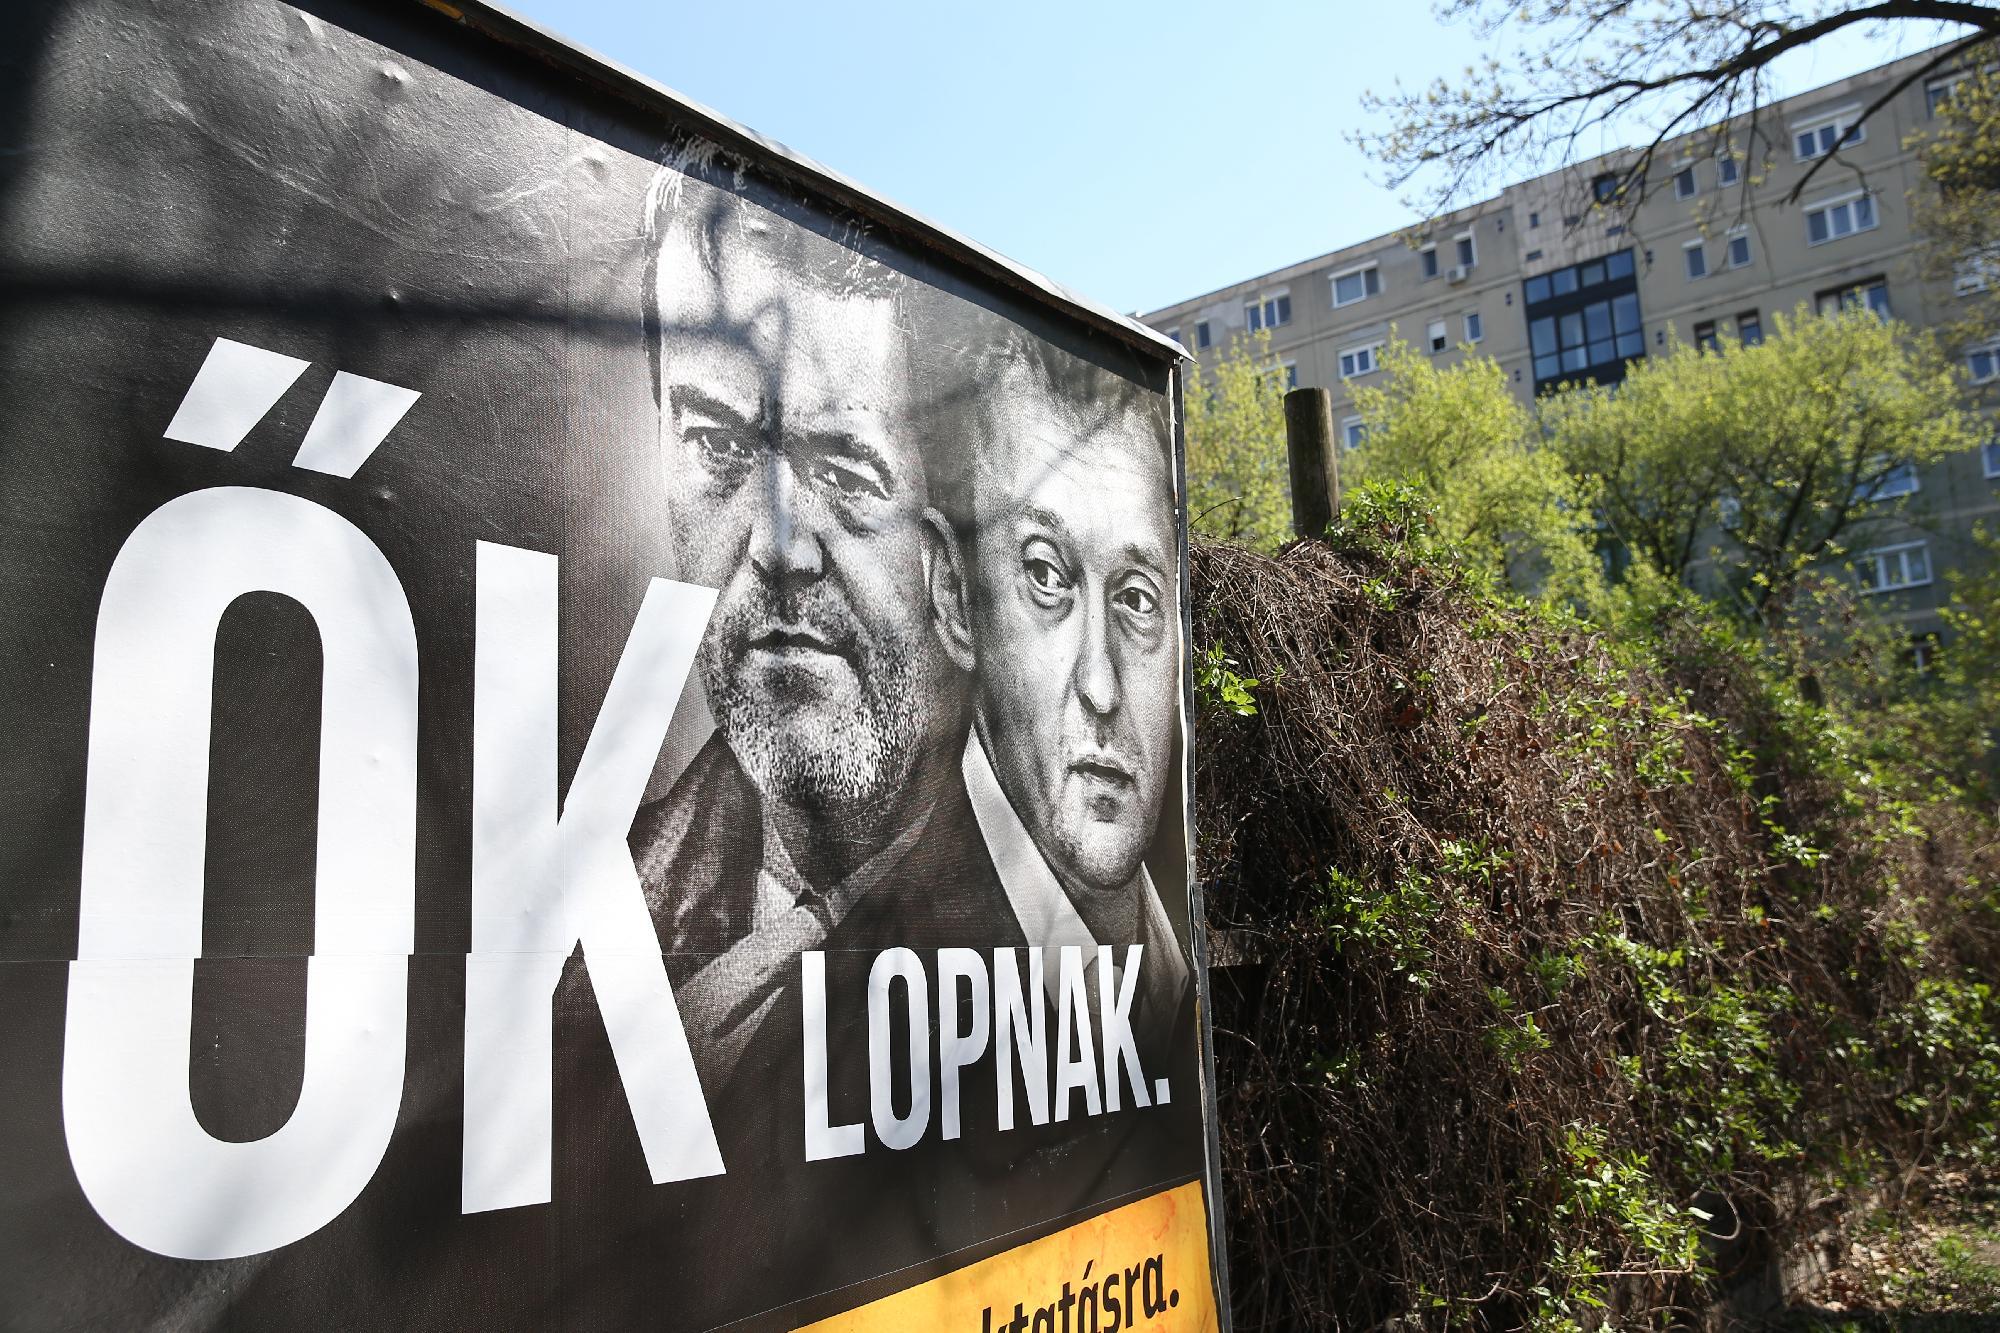 Unofficial Adviser To PM Árpád Habony Sues Jobbik Over Campaign Ads